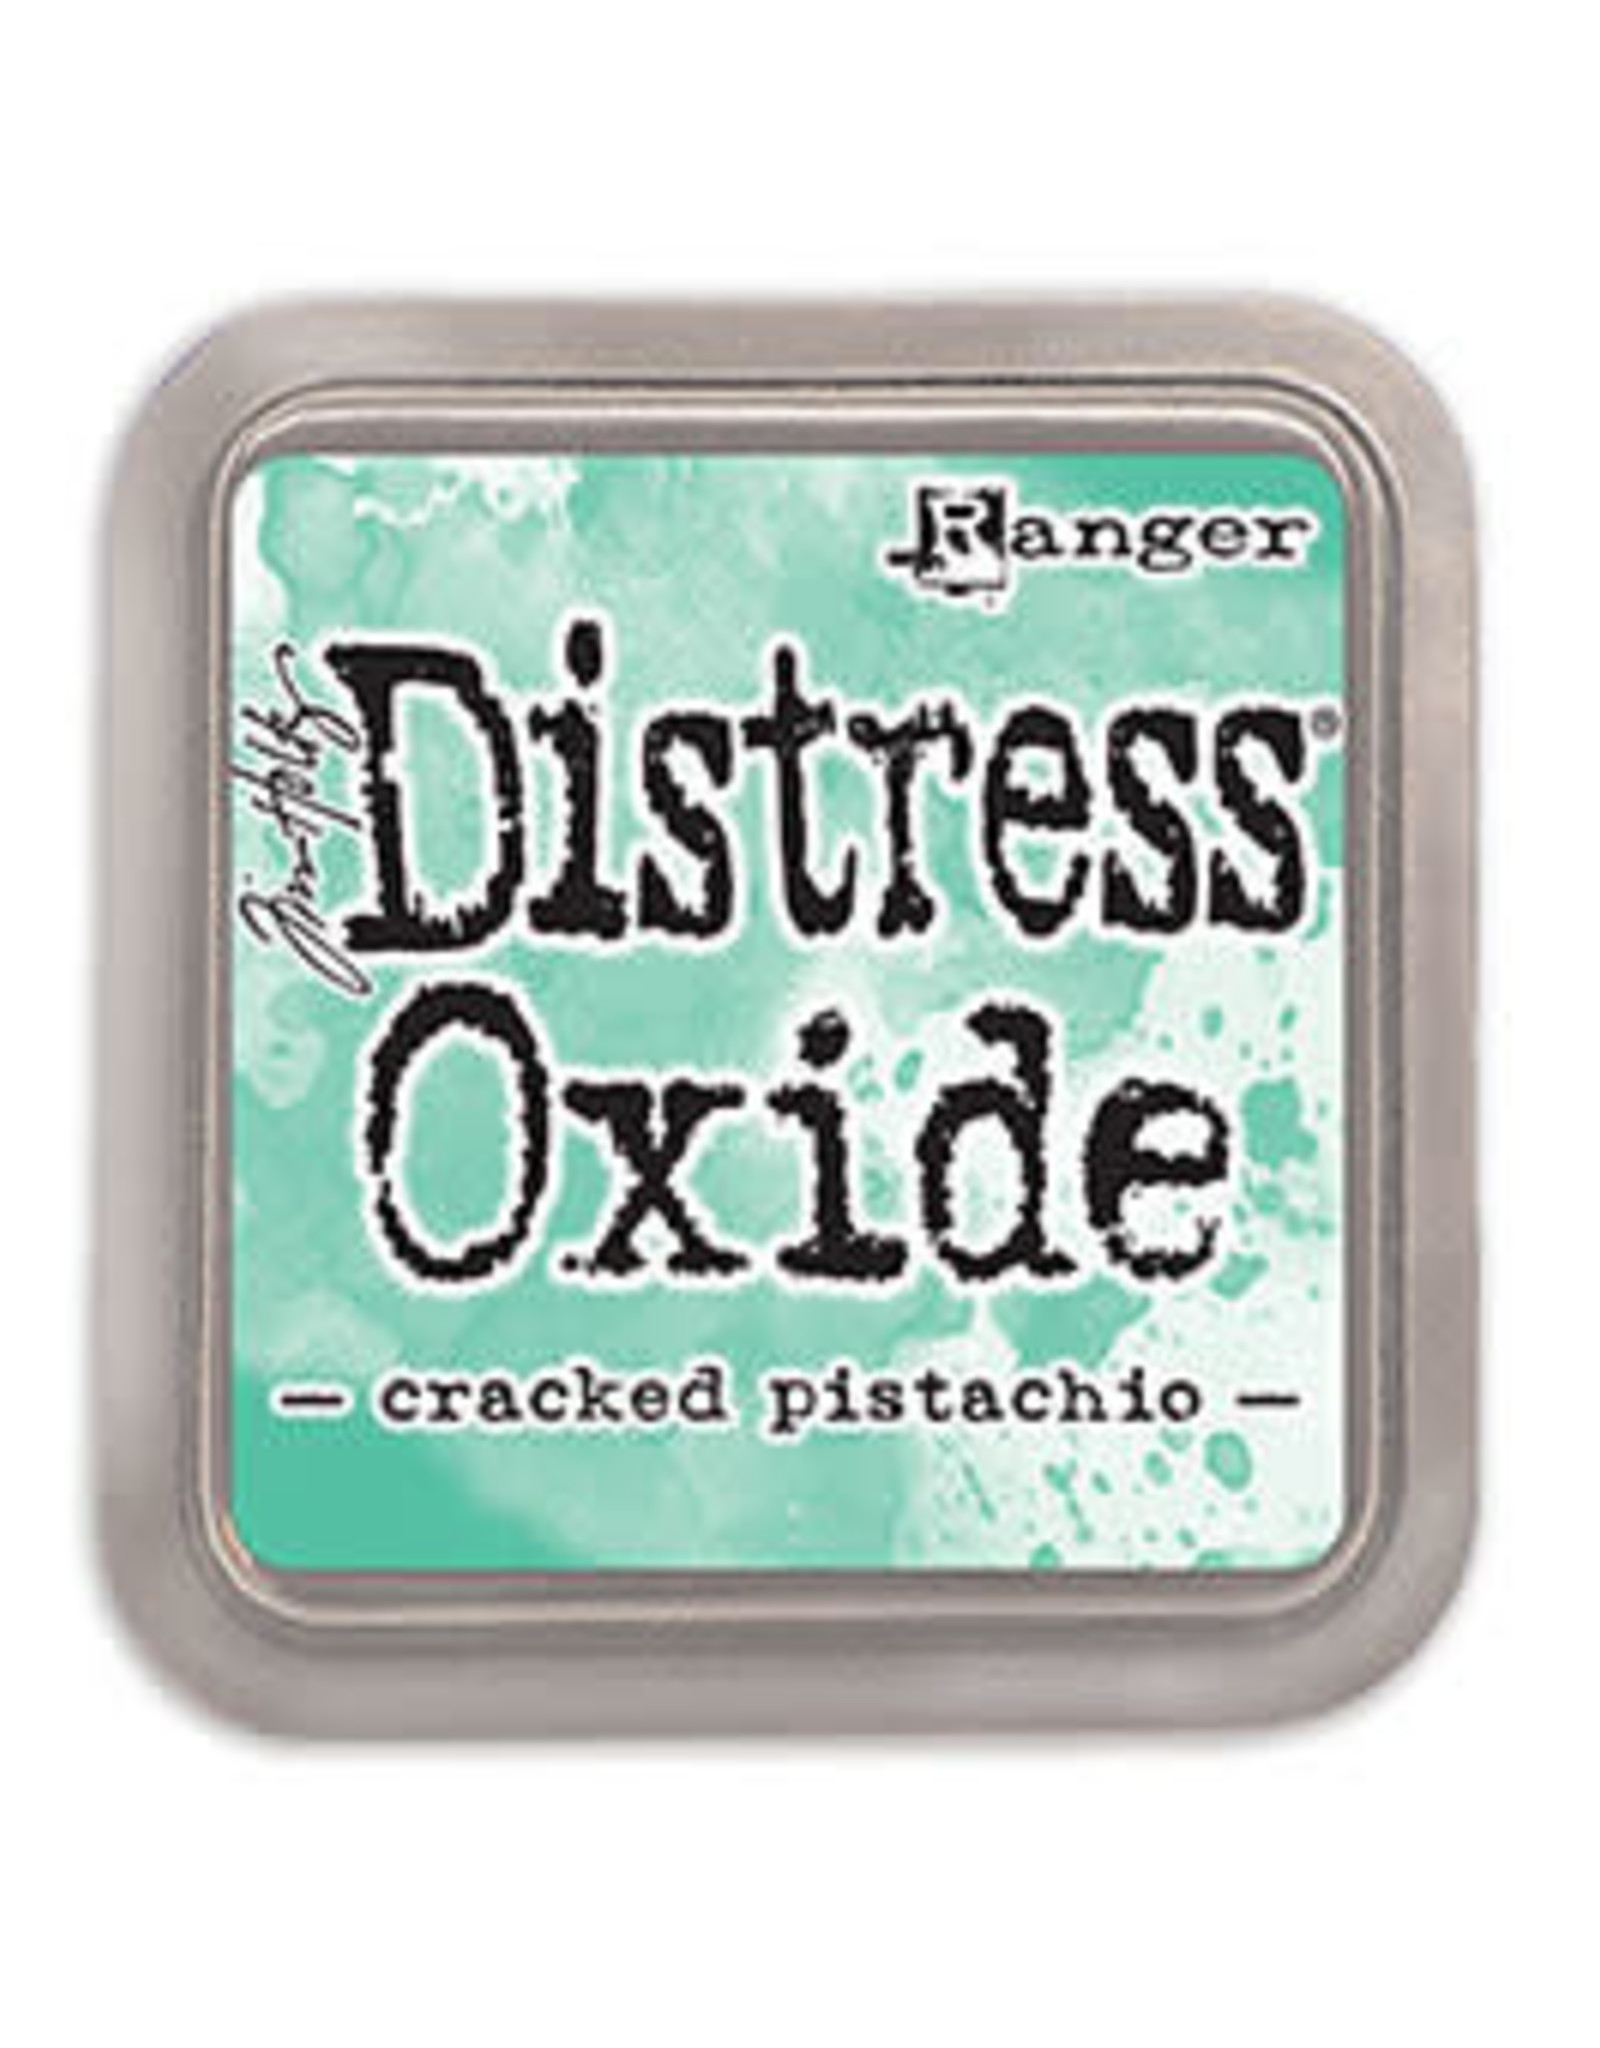 Tim Holtz - Ranger Distress Oxide Cracked Pistachio